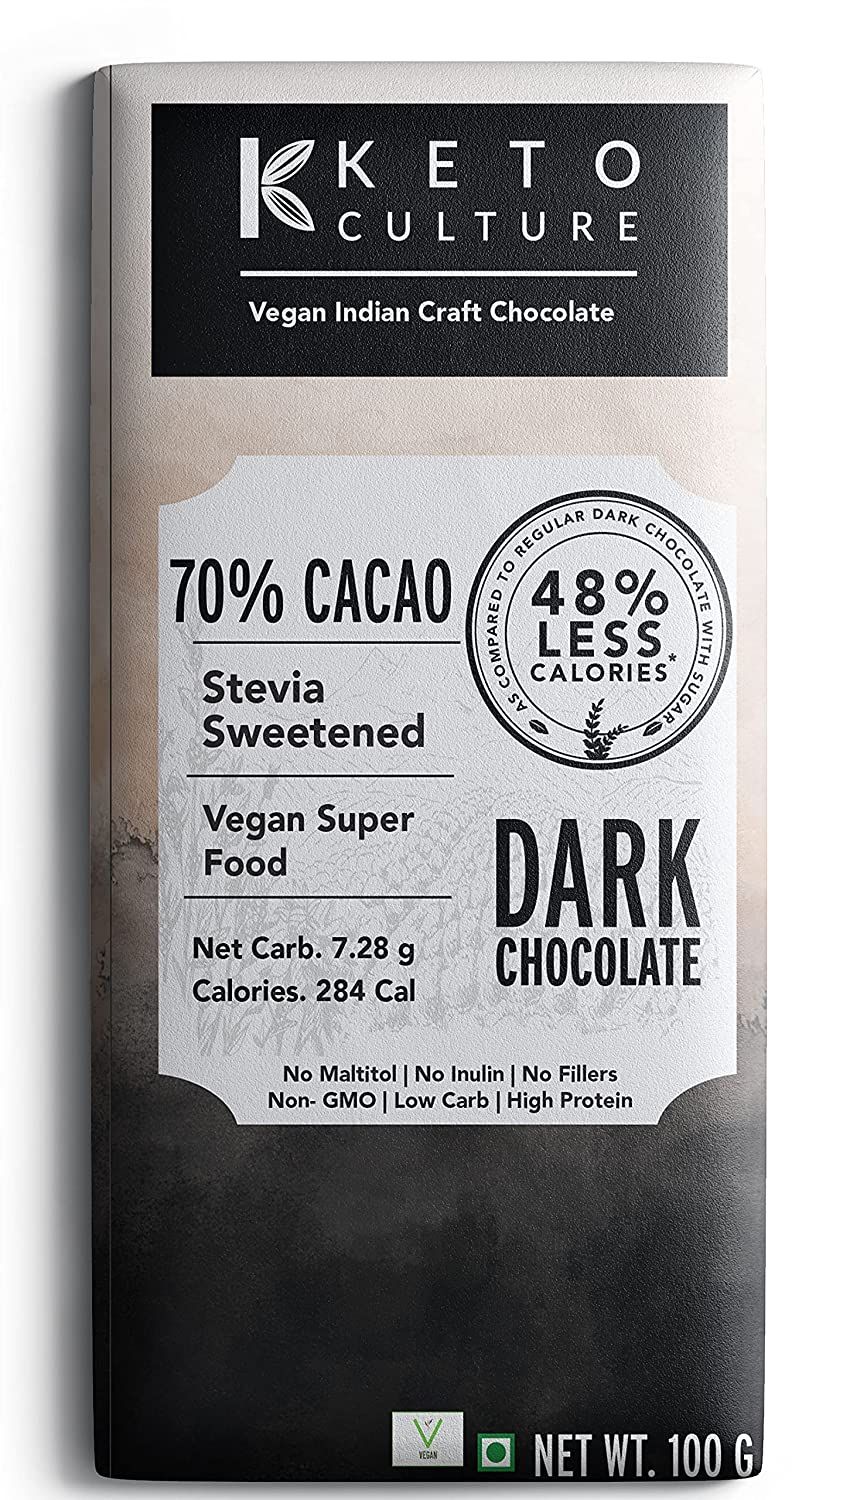 Keto Culture 70% Cacao Vegan Dark Chocolate Image